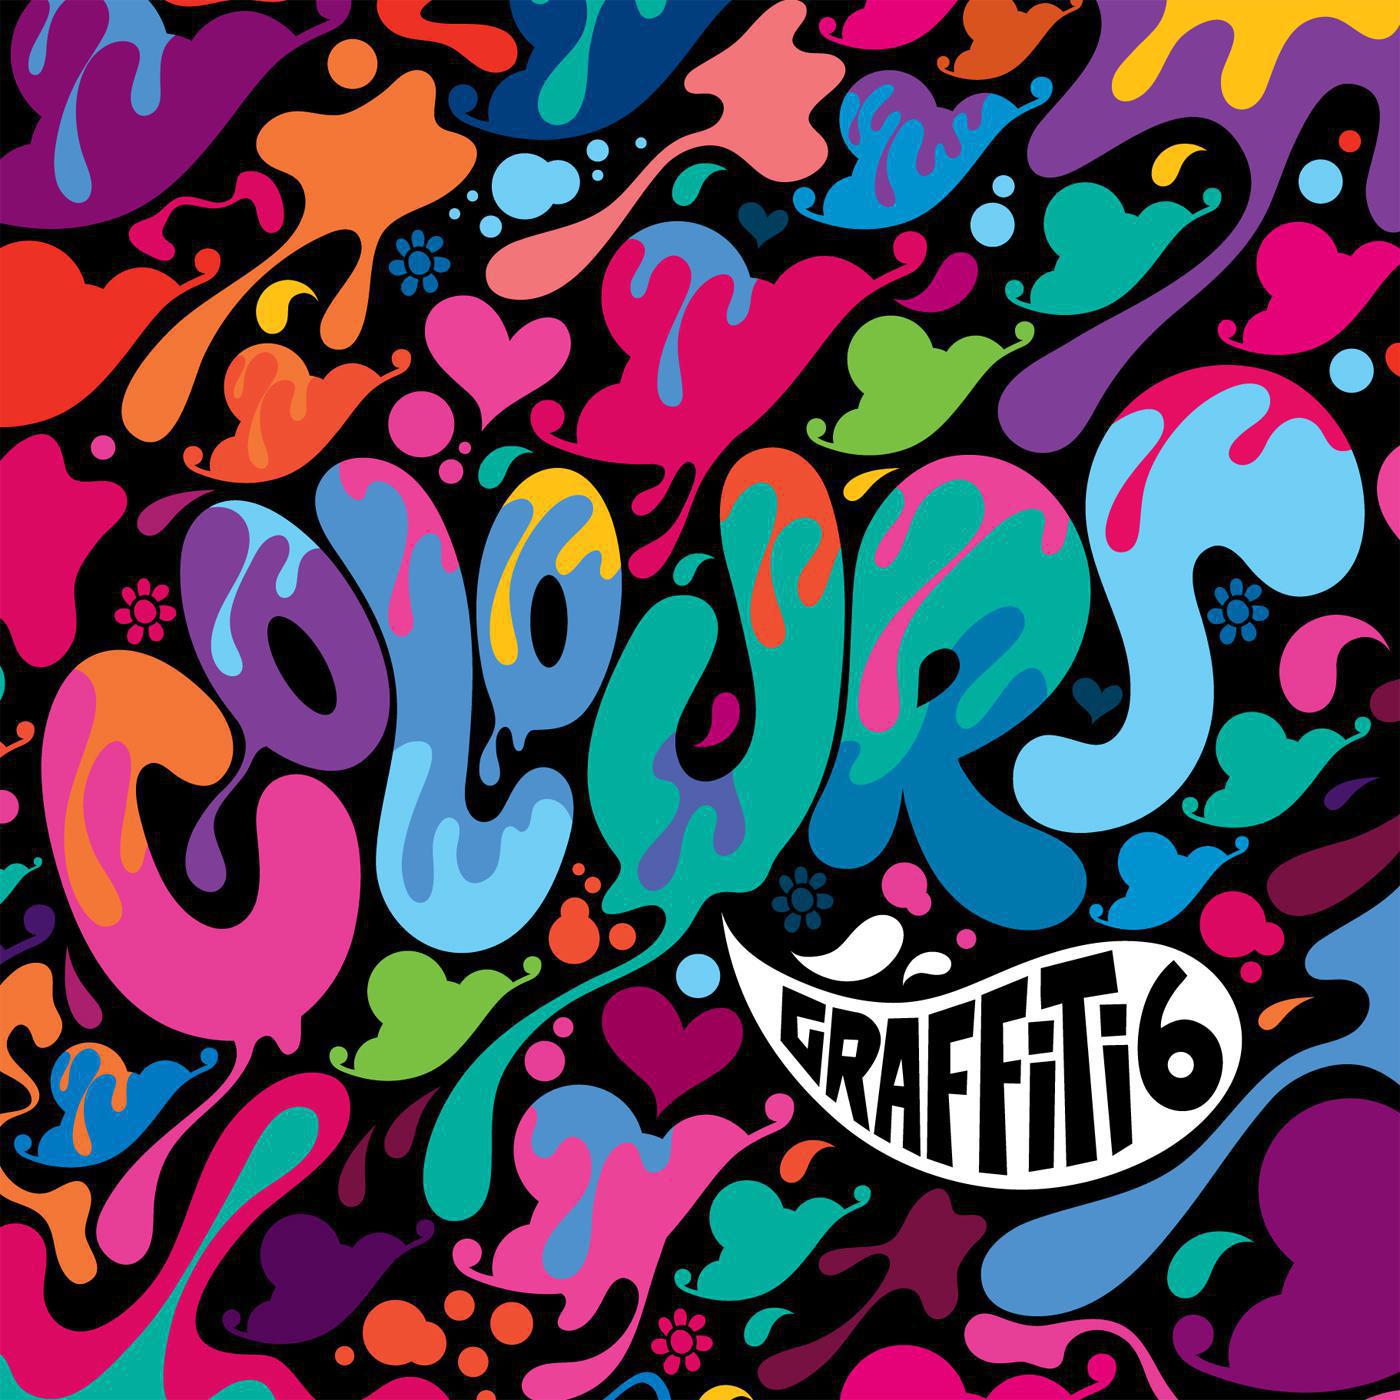 graffiti6 colours.jpg